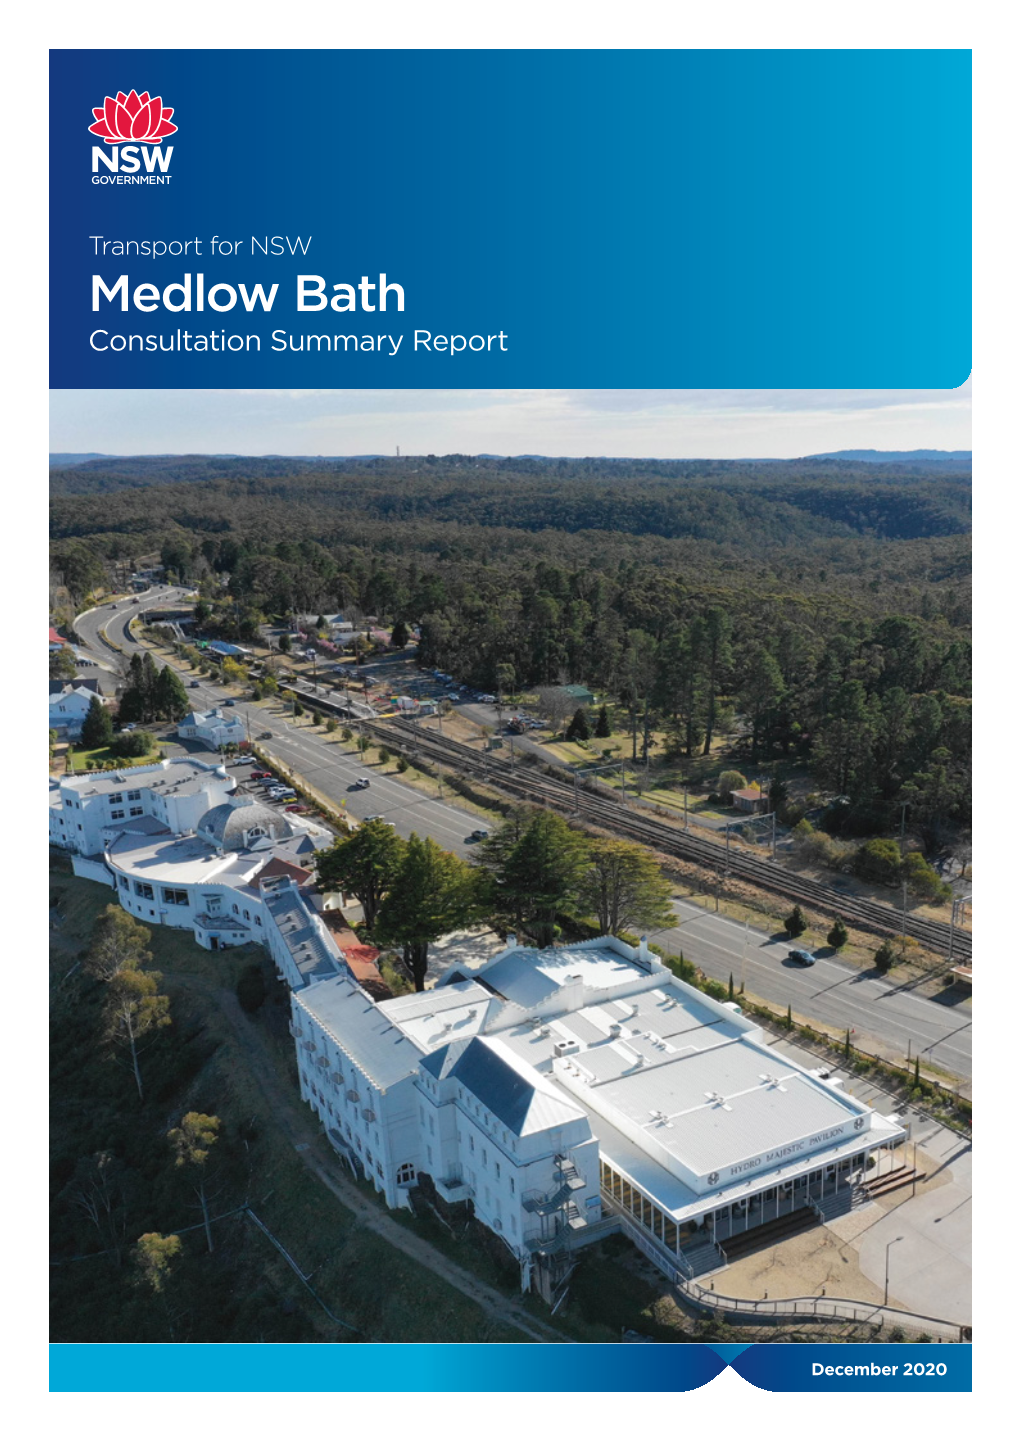 Medlow Bath Consultation Summary Report December 2020